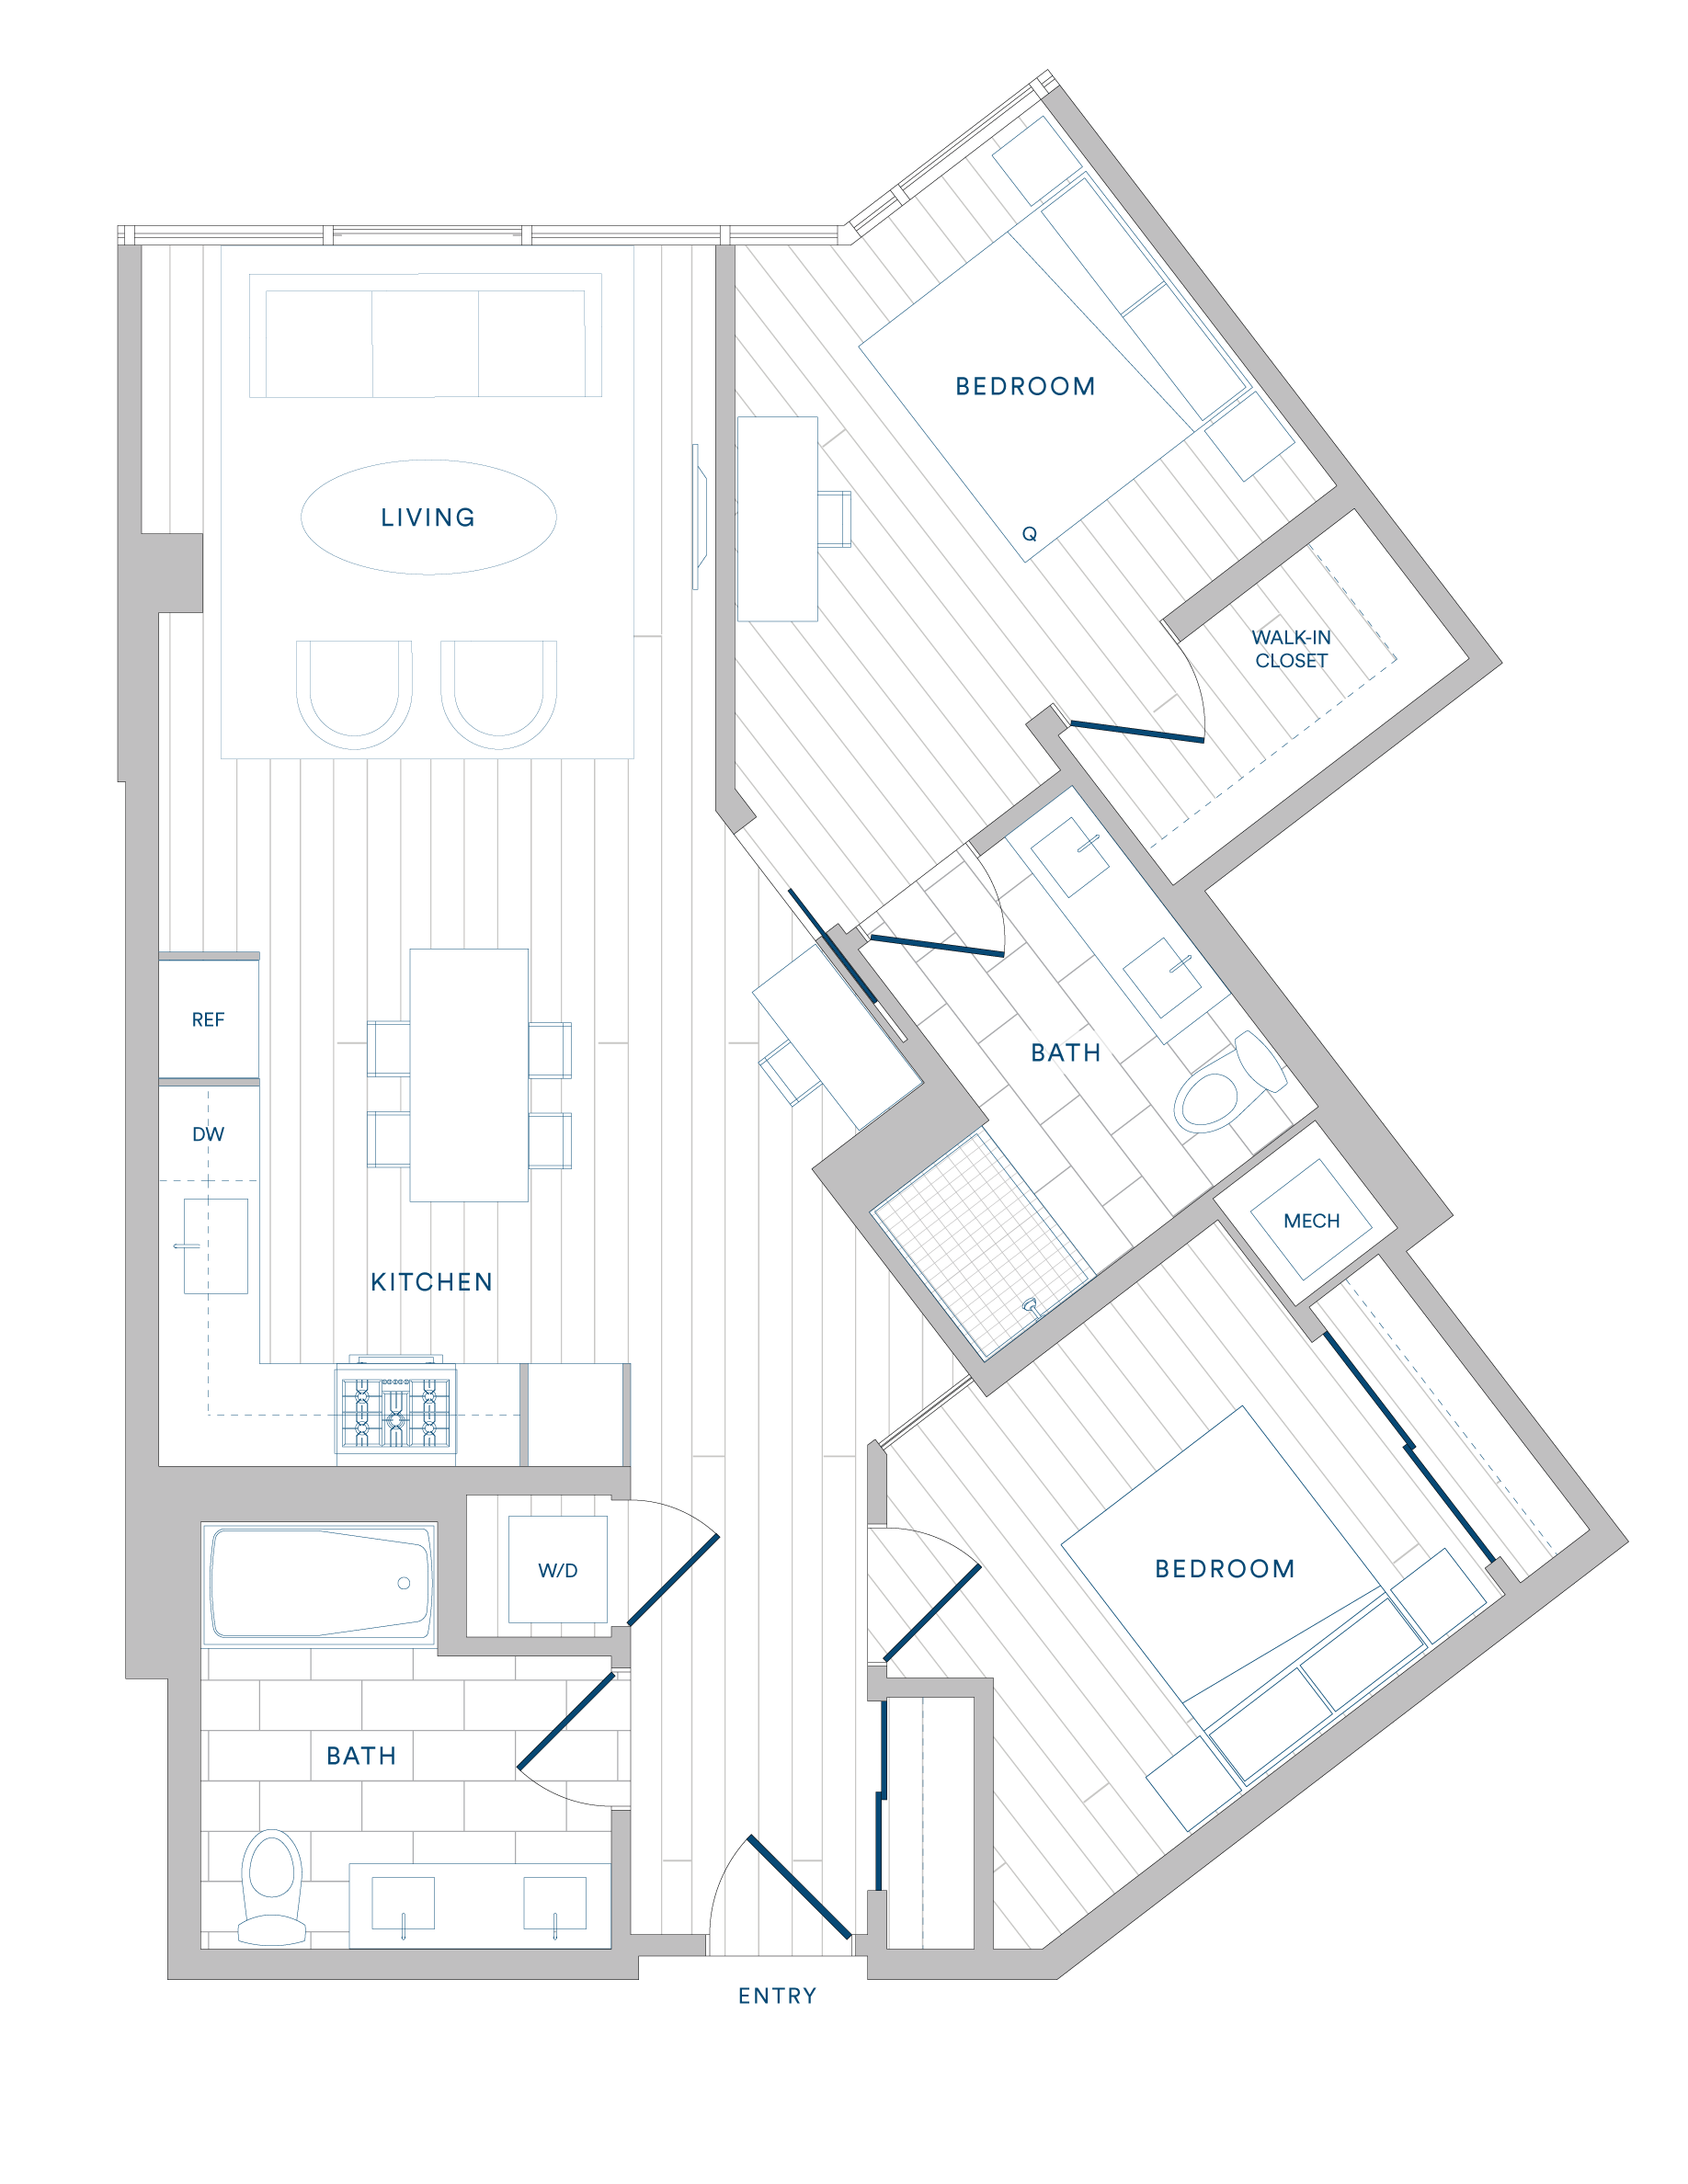 Floorplan for Apartment #1222, 2 bedroom unit at Margarite